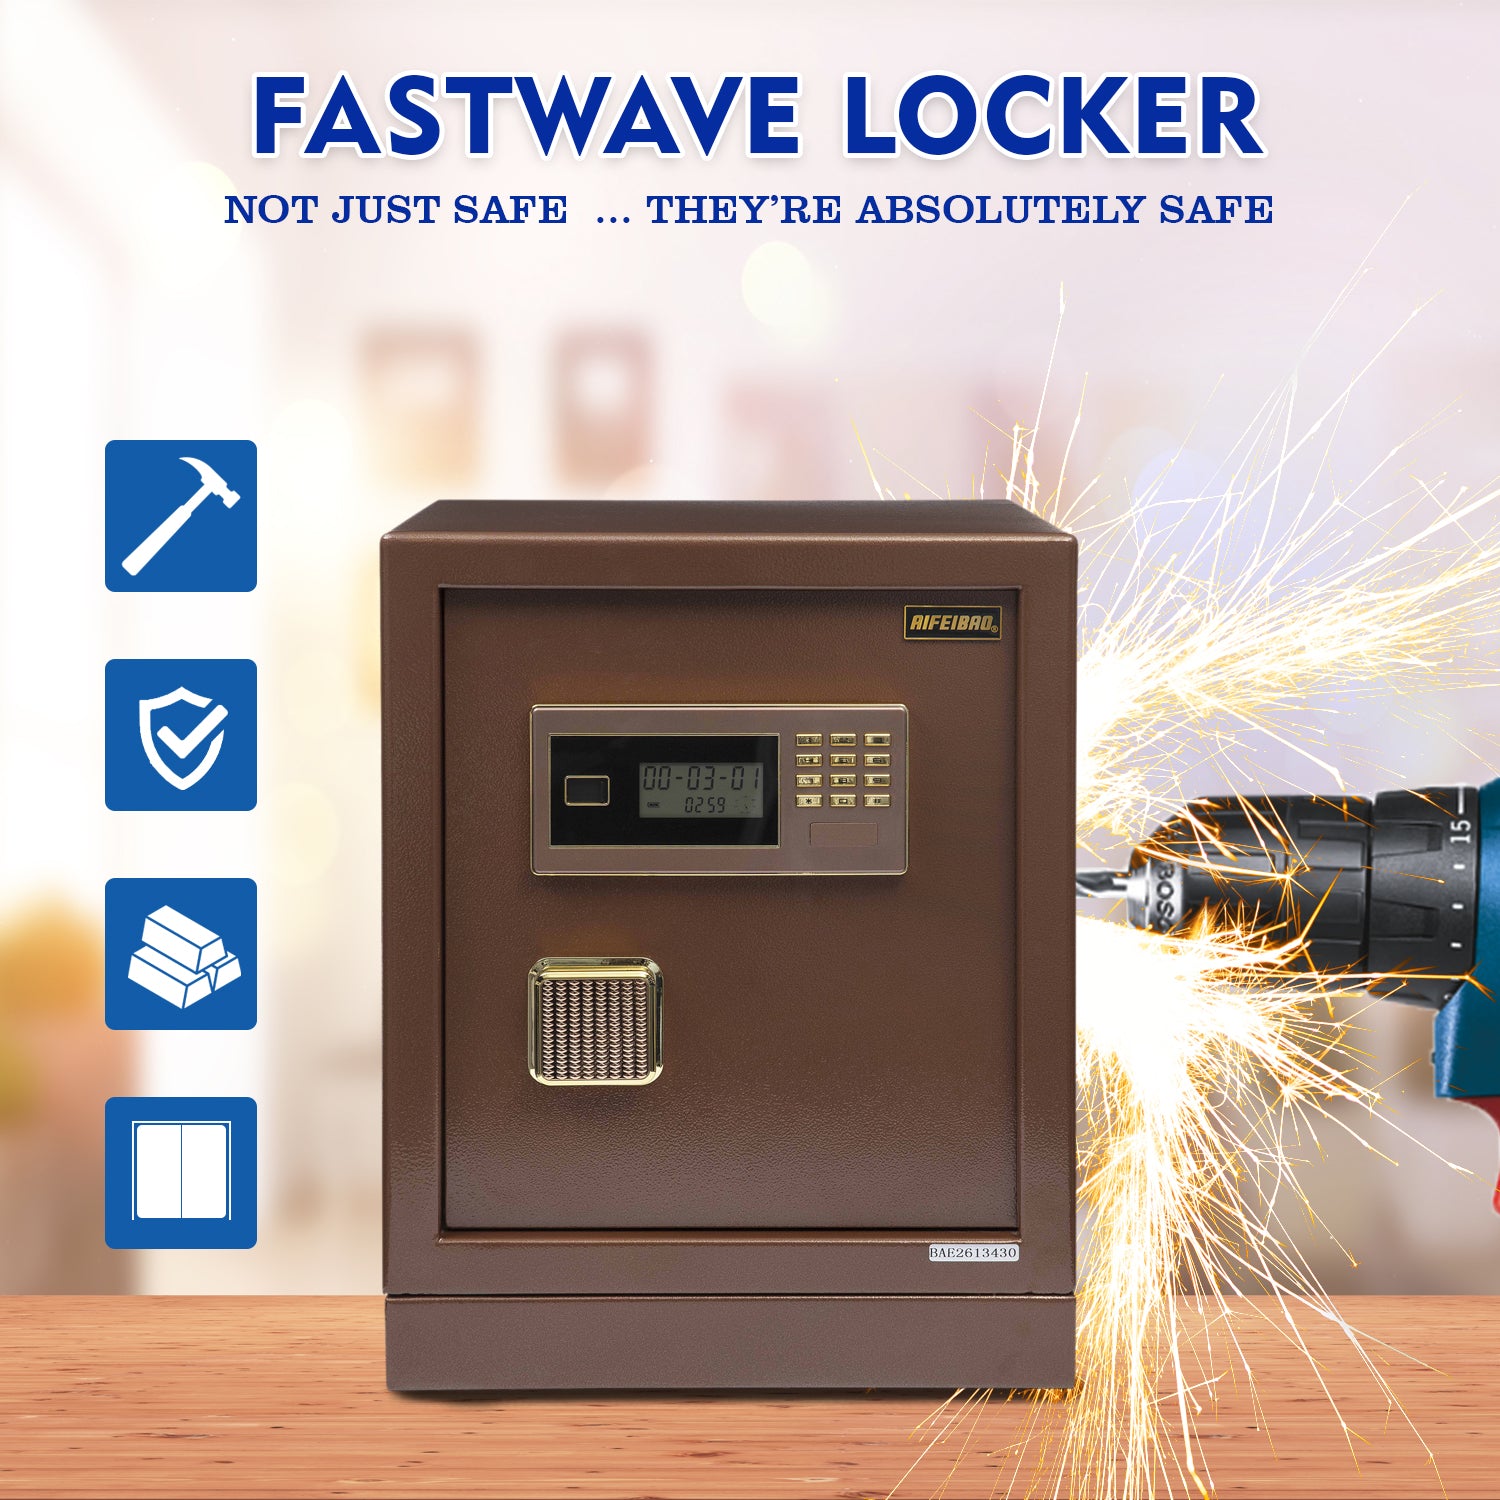 Digital Security Locker NW-KG-26 Golden Key